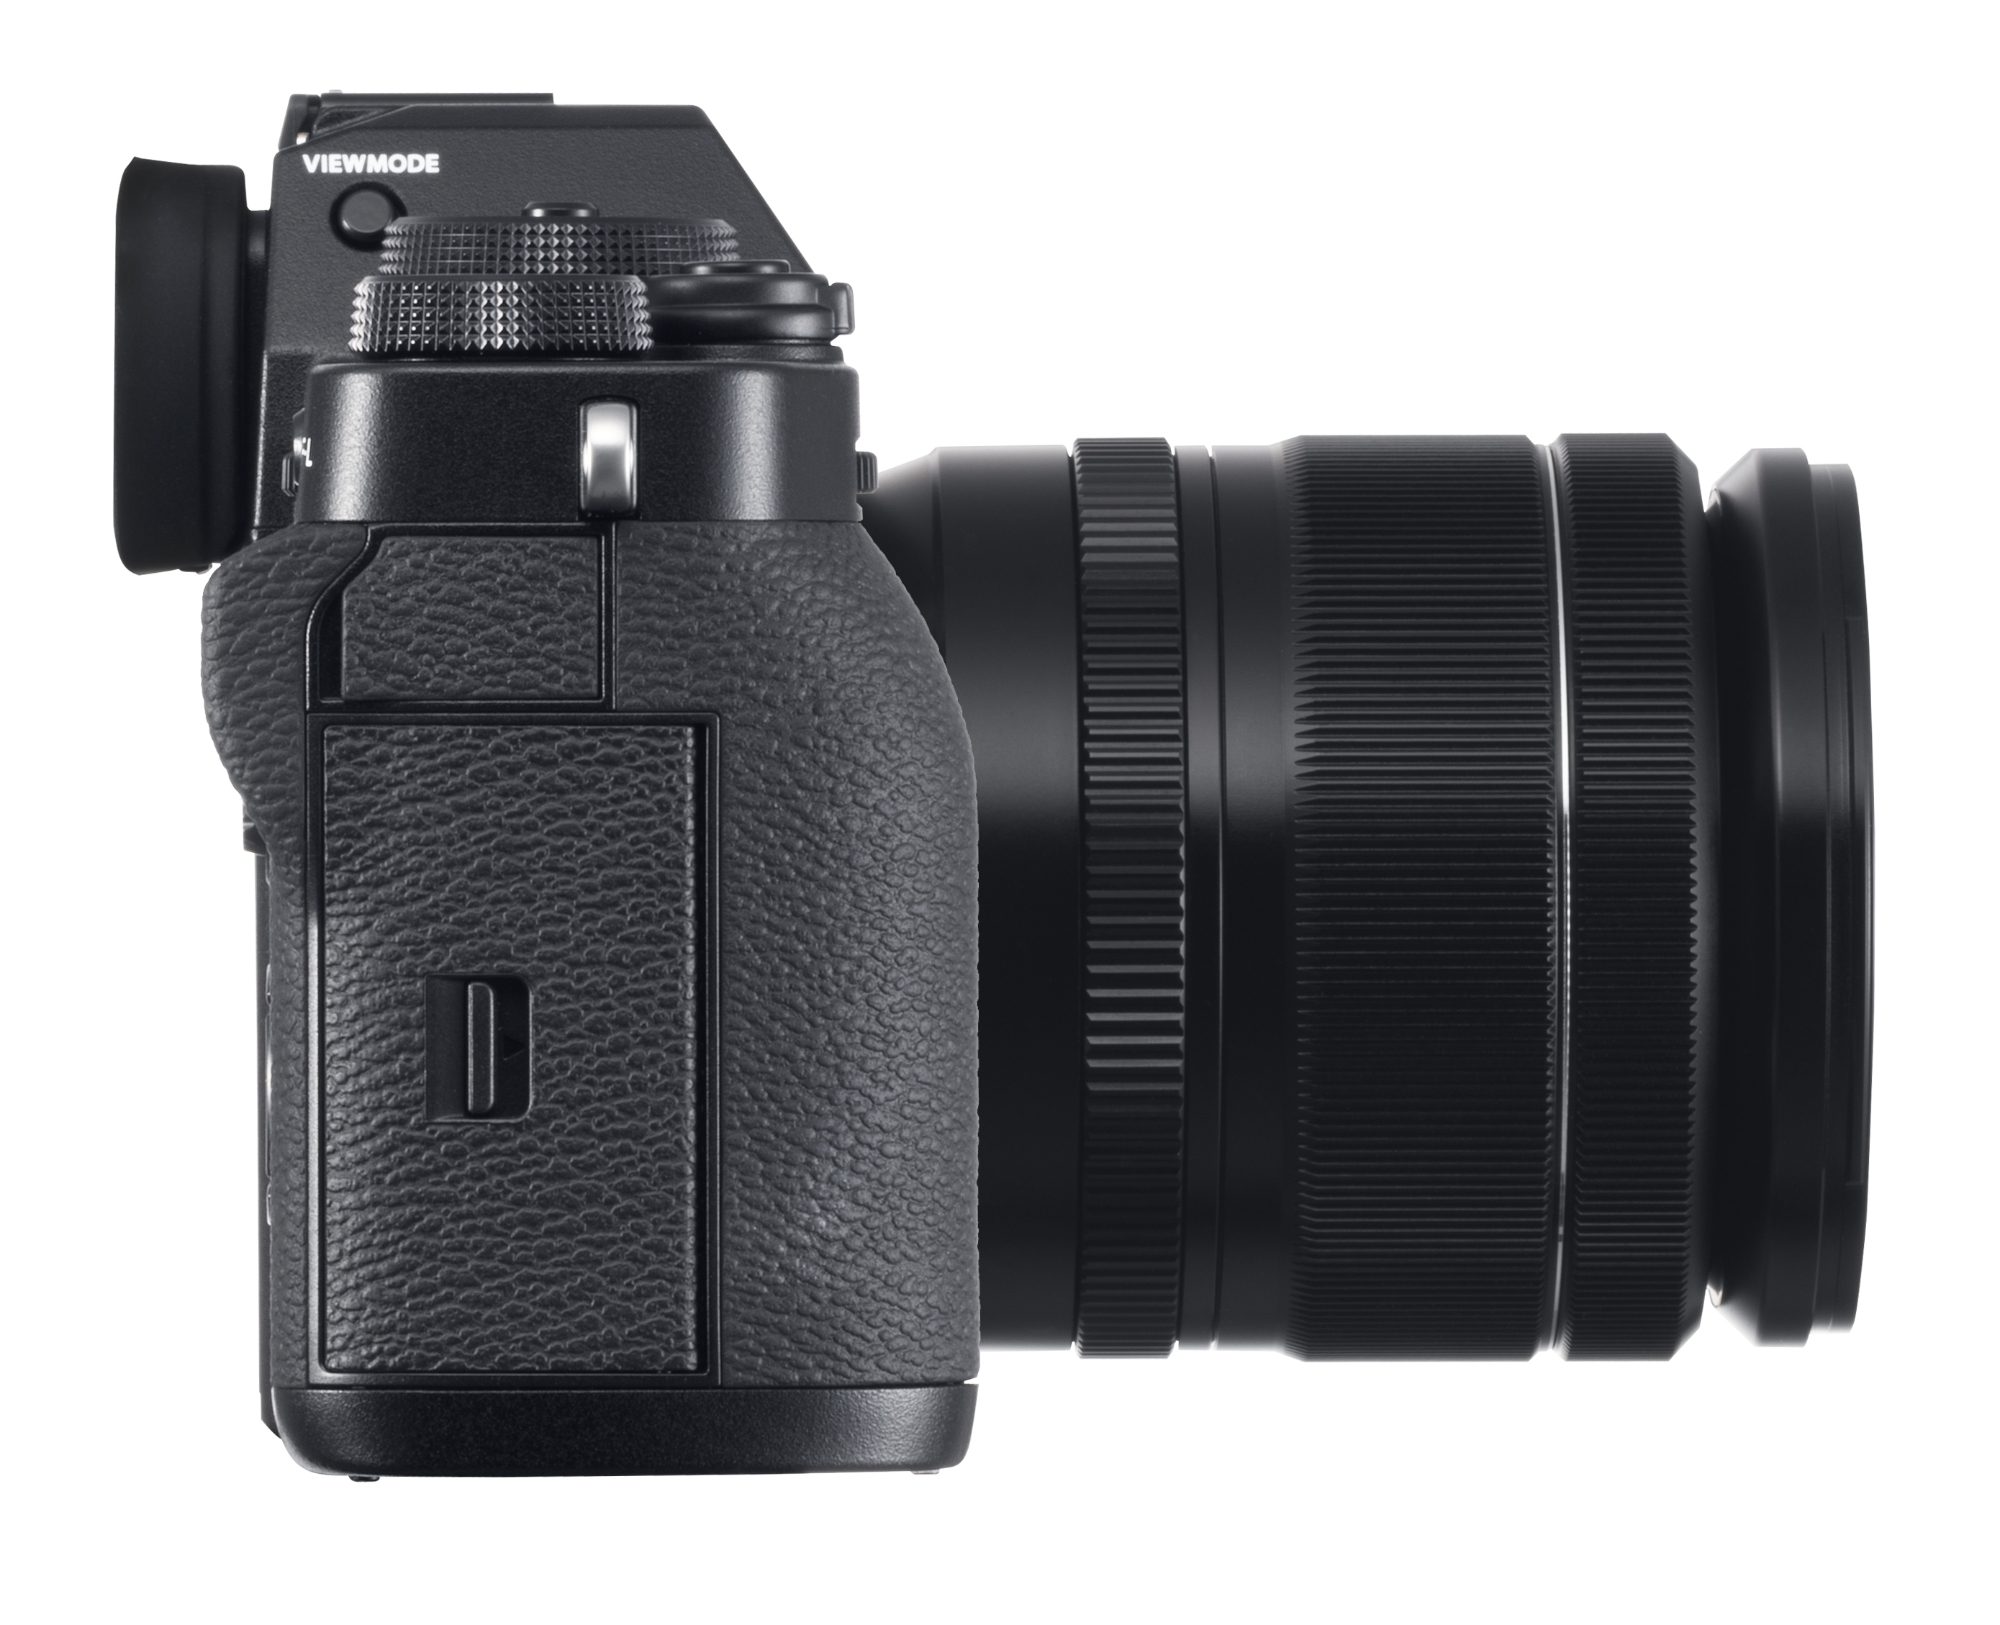 Fujifilm X-T3 Kit with 18-55mm lens - Black